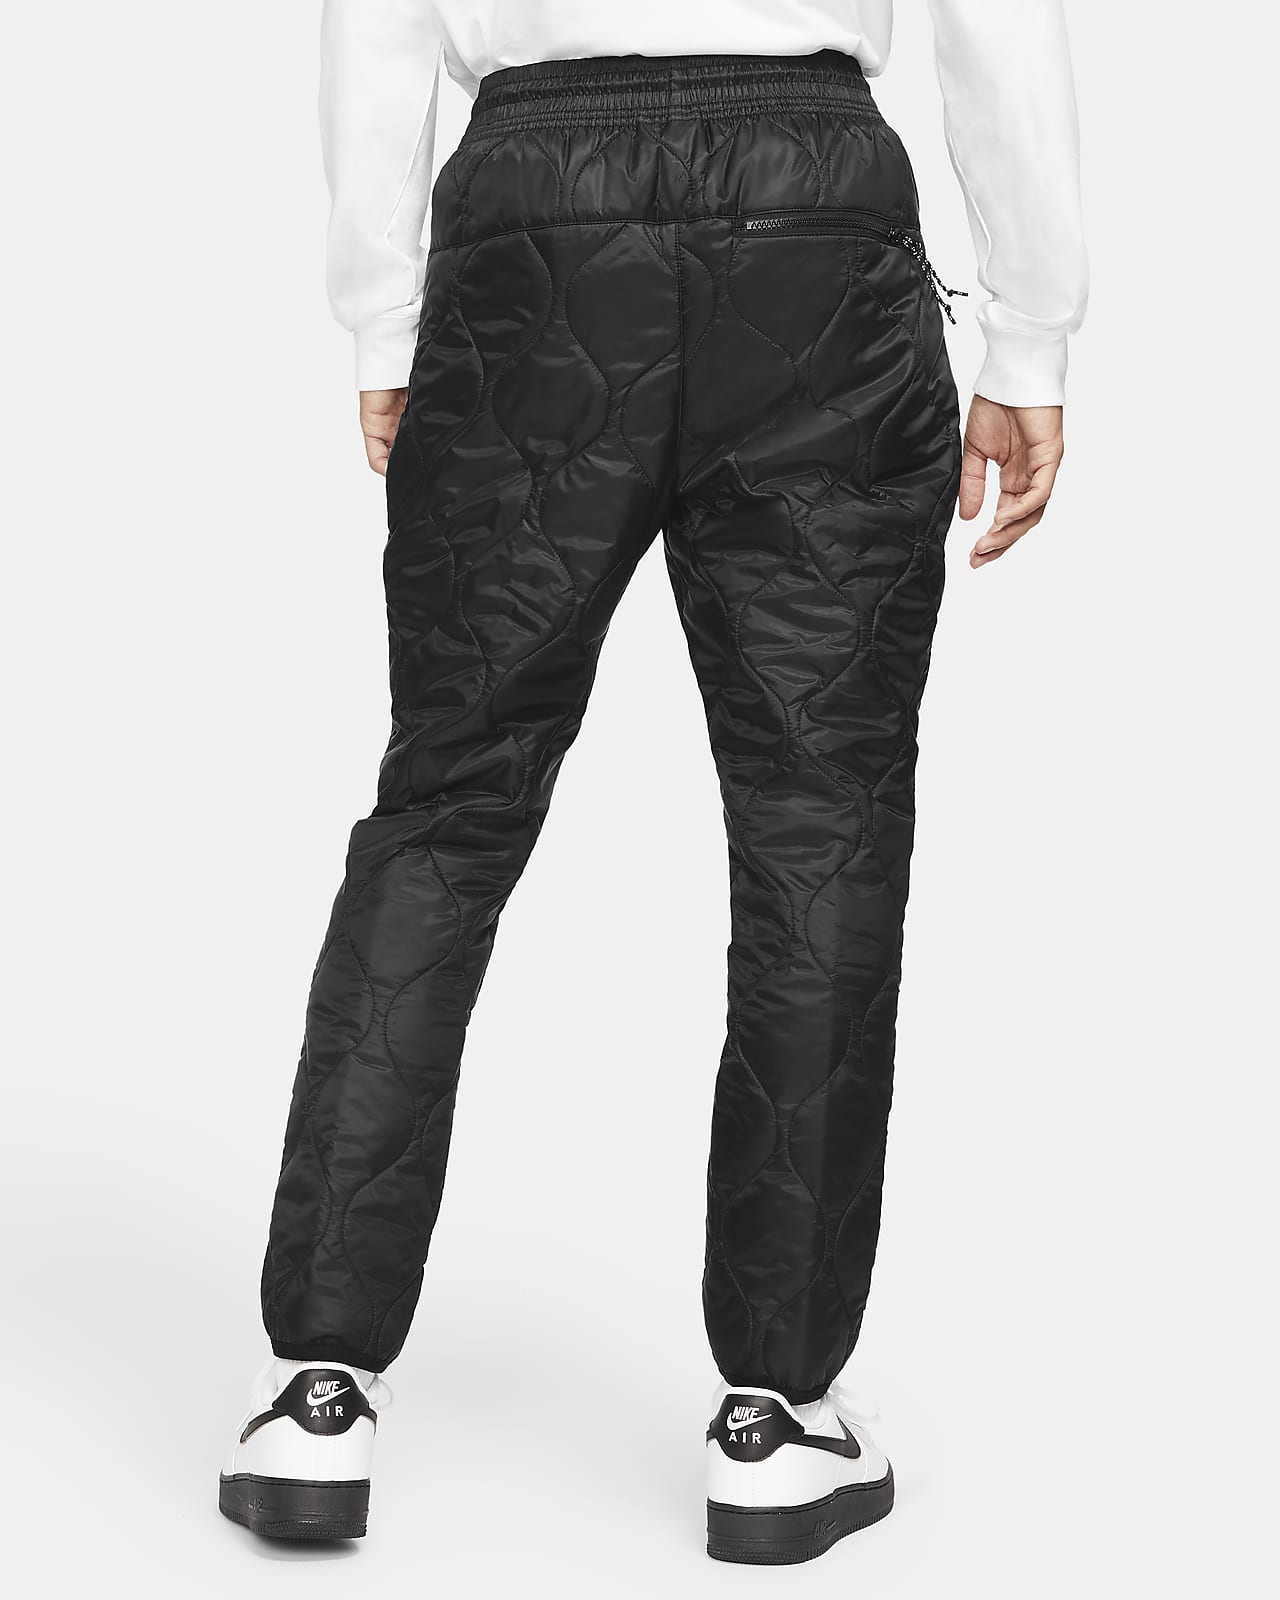 XL ナイキ ウィンターライズド 中綿ジャケット ジョガーパンツ 上下セット 黒くろいぬ男子体操服